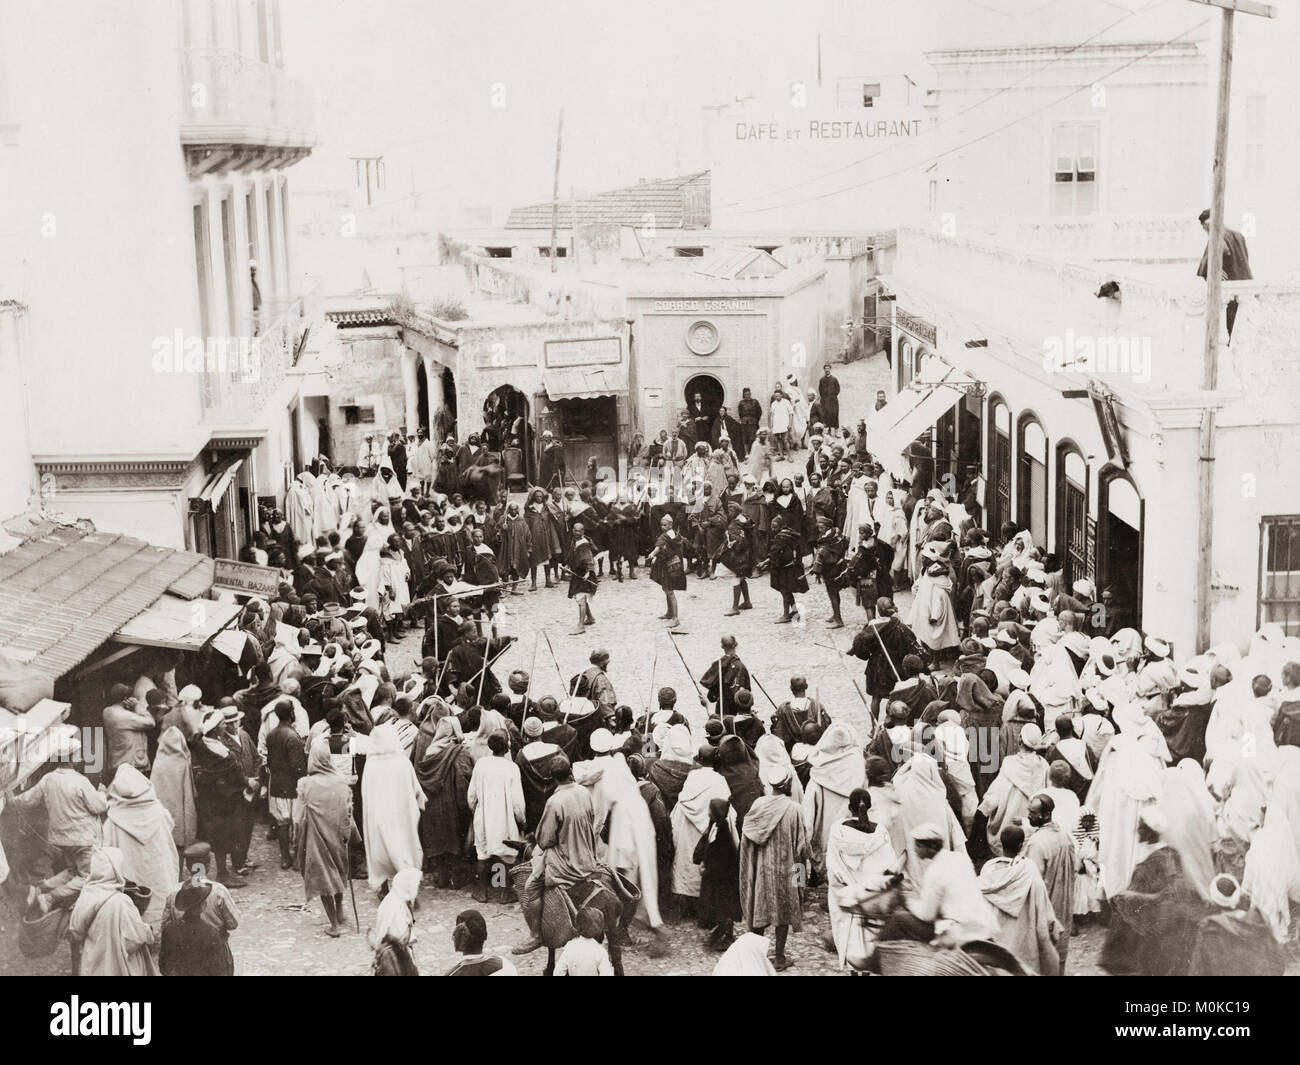 Soko Chico marché, Tanger, Maroc, c.1900 Banque D'Images